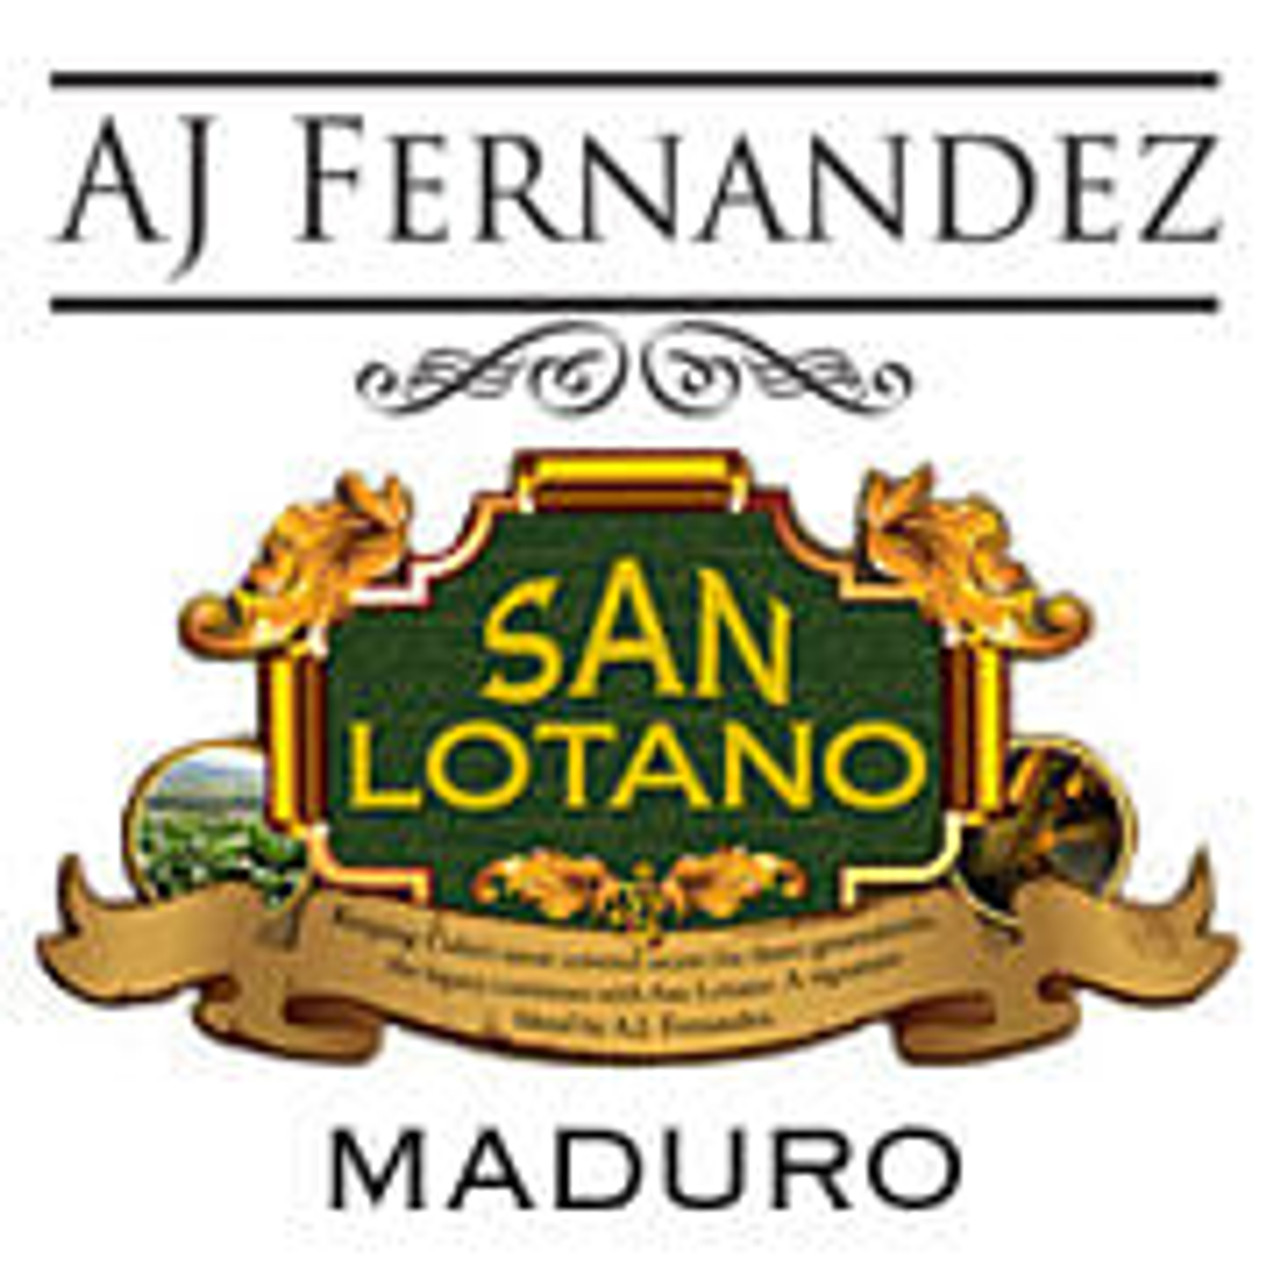 AJ Fernandez San Lotano Requiem Maduro Logo